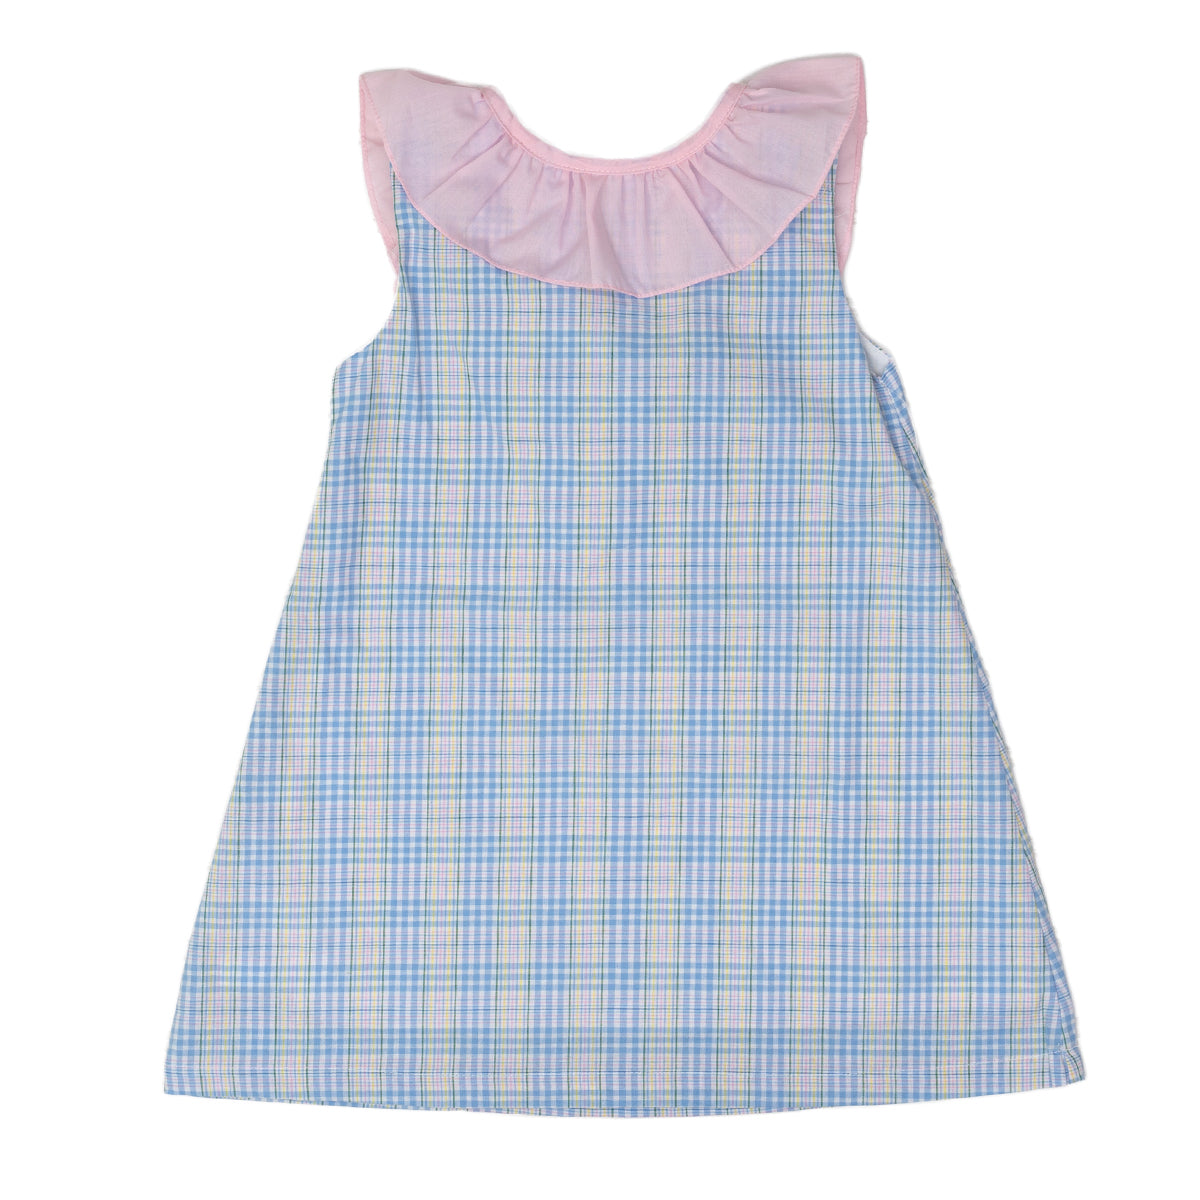 Spring Plaid Ally Kole Little Girl's Dress by The Oaks Apparel